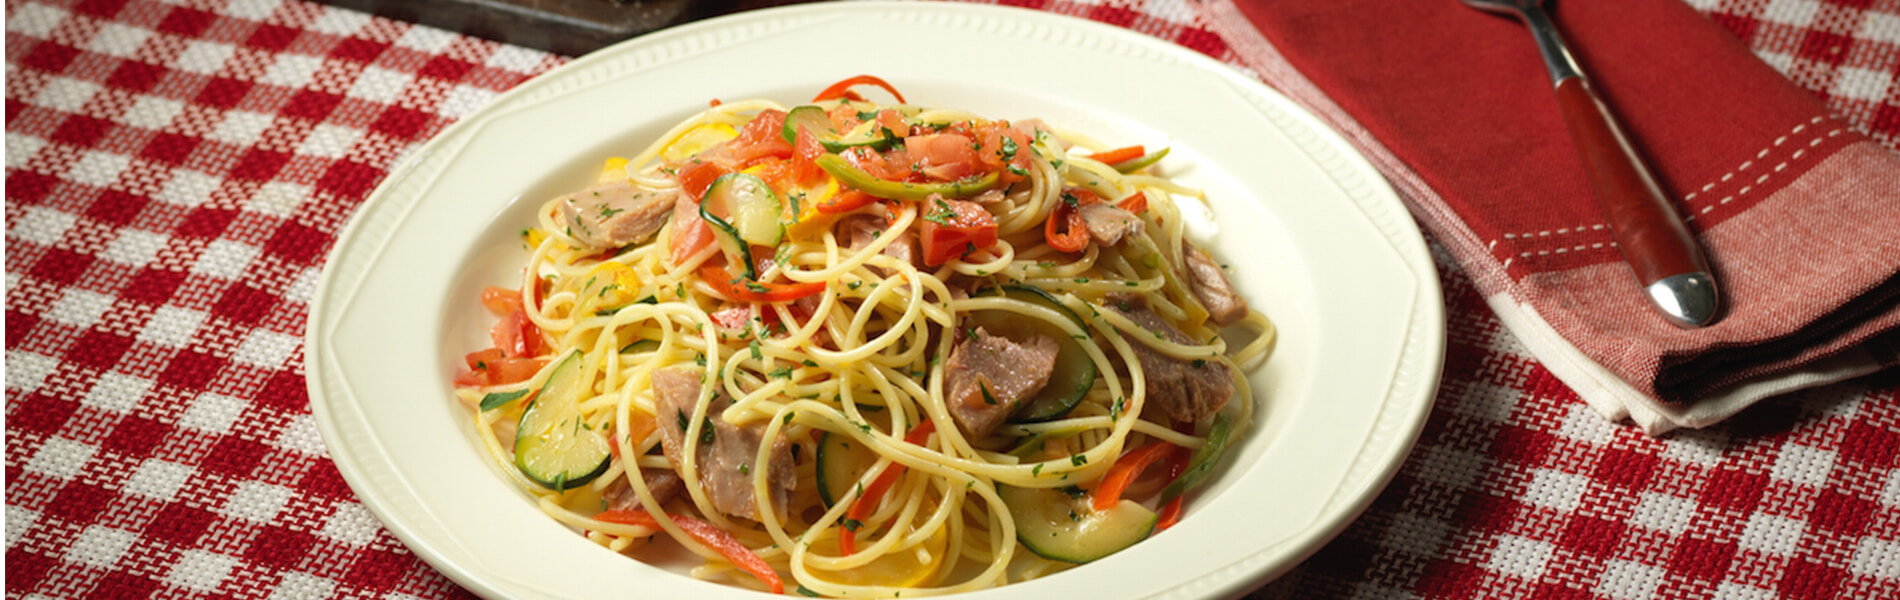 Spaghetti doria No 5 con verduras salteadas y lomitos de atún